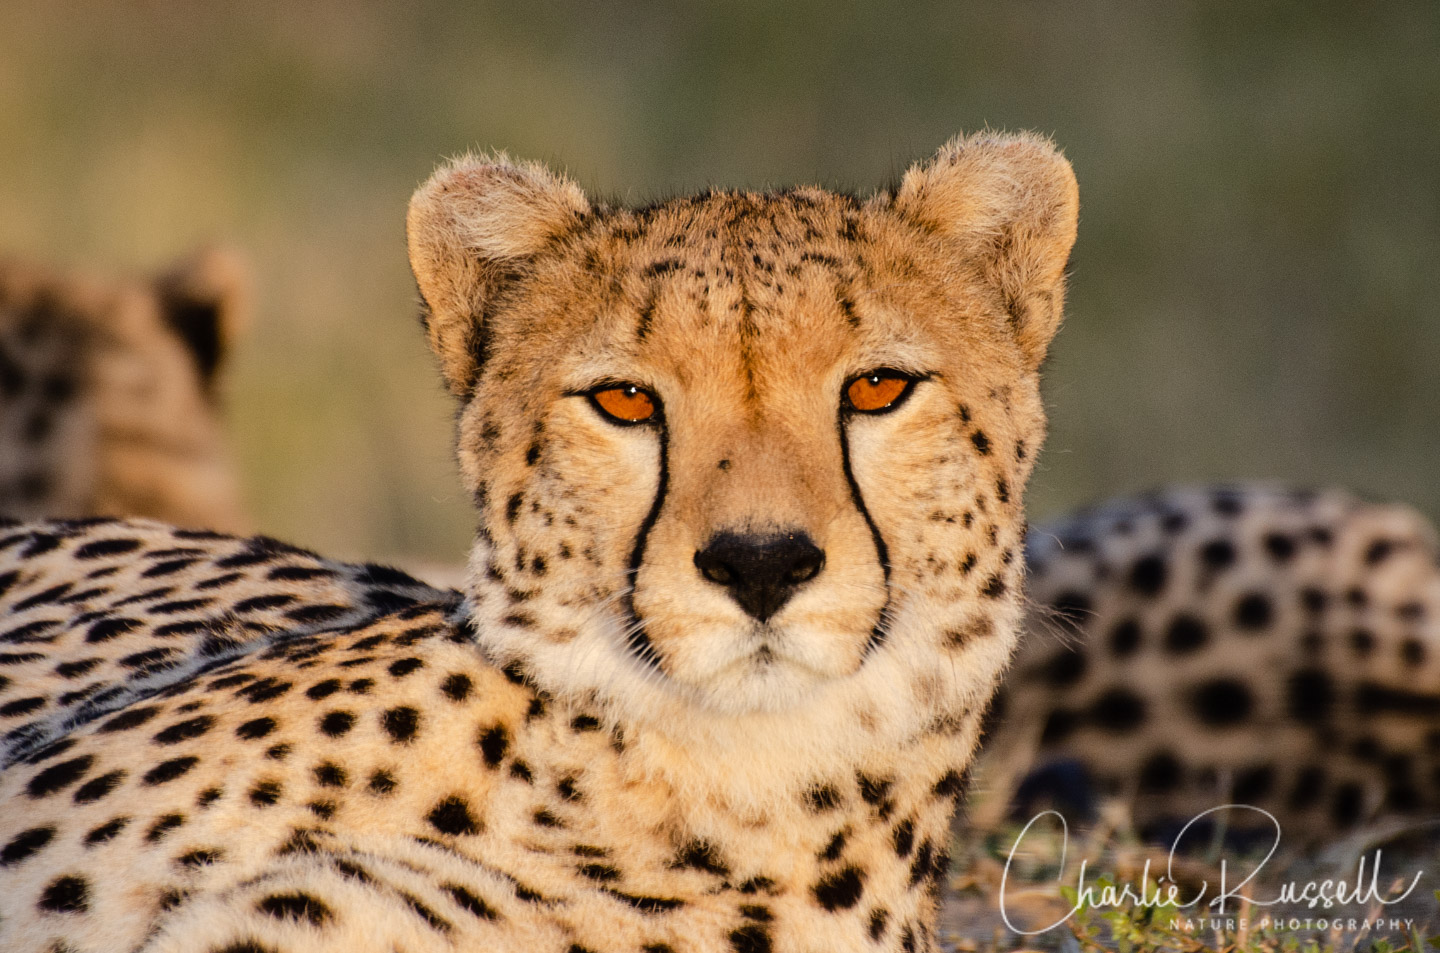 Southern and Eastern African Cheetah, Acinonyx jubatus ssp. jubatus